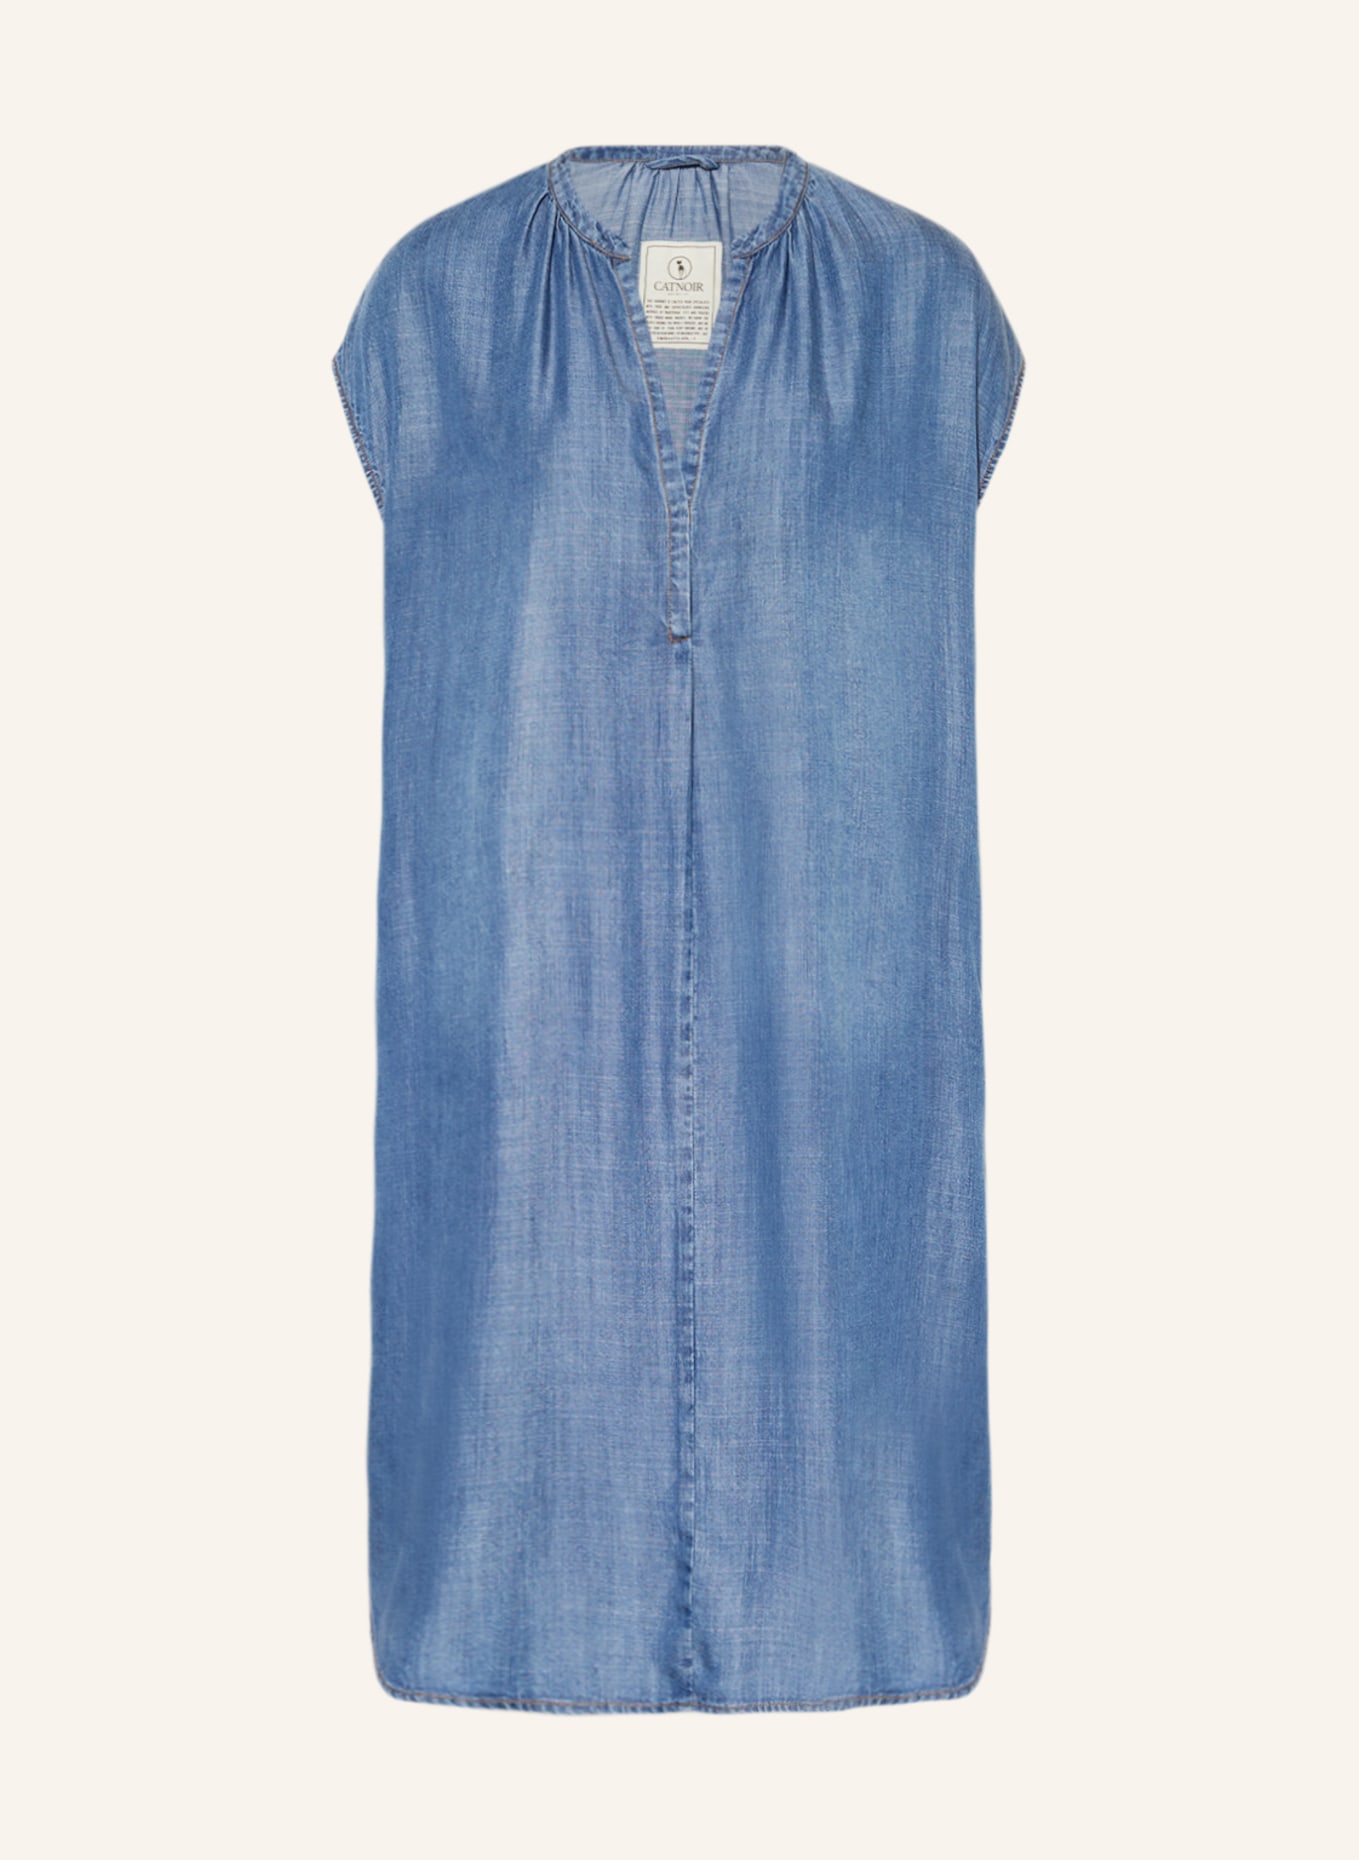 CATNOIR Jeanskleid, Farbe: 68 jeans (Bild 1)